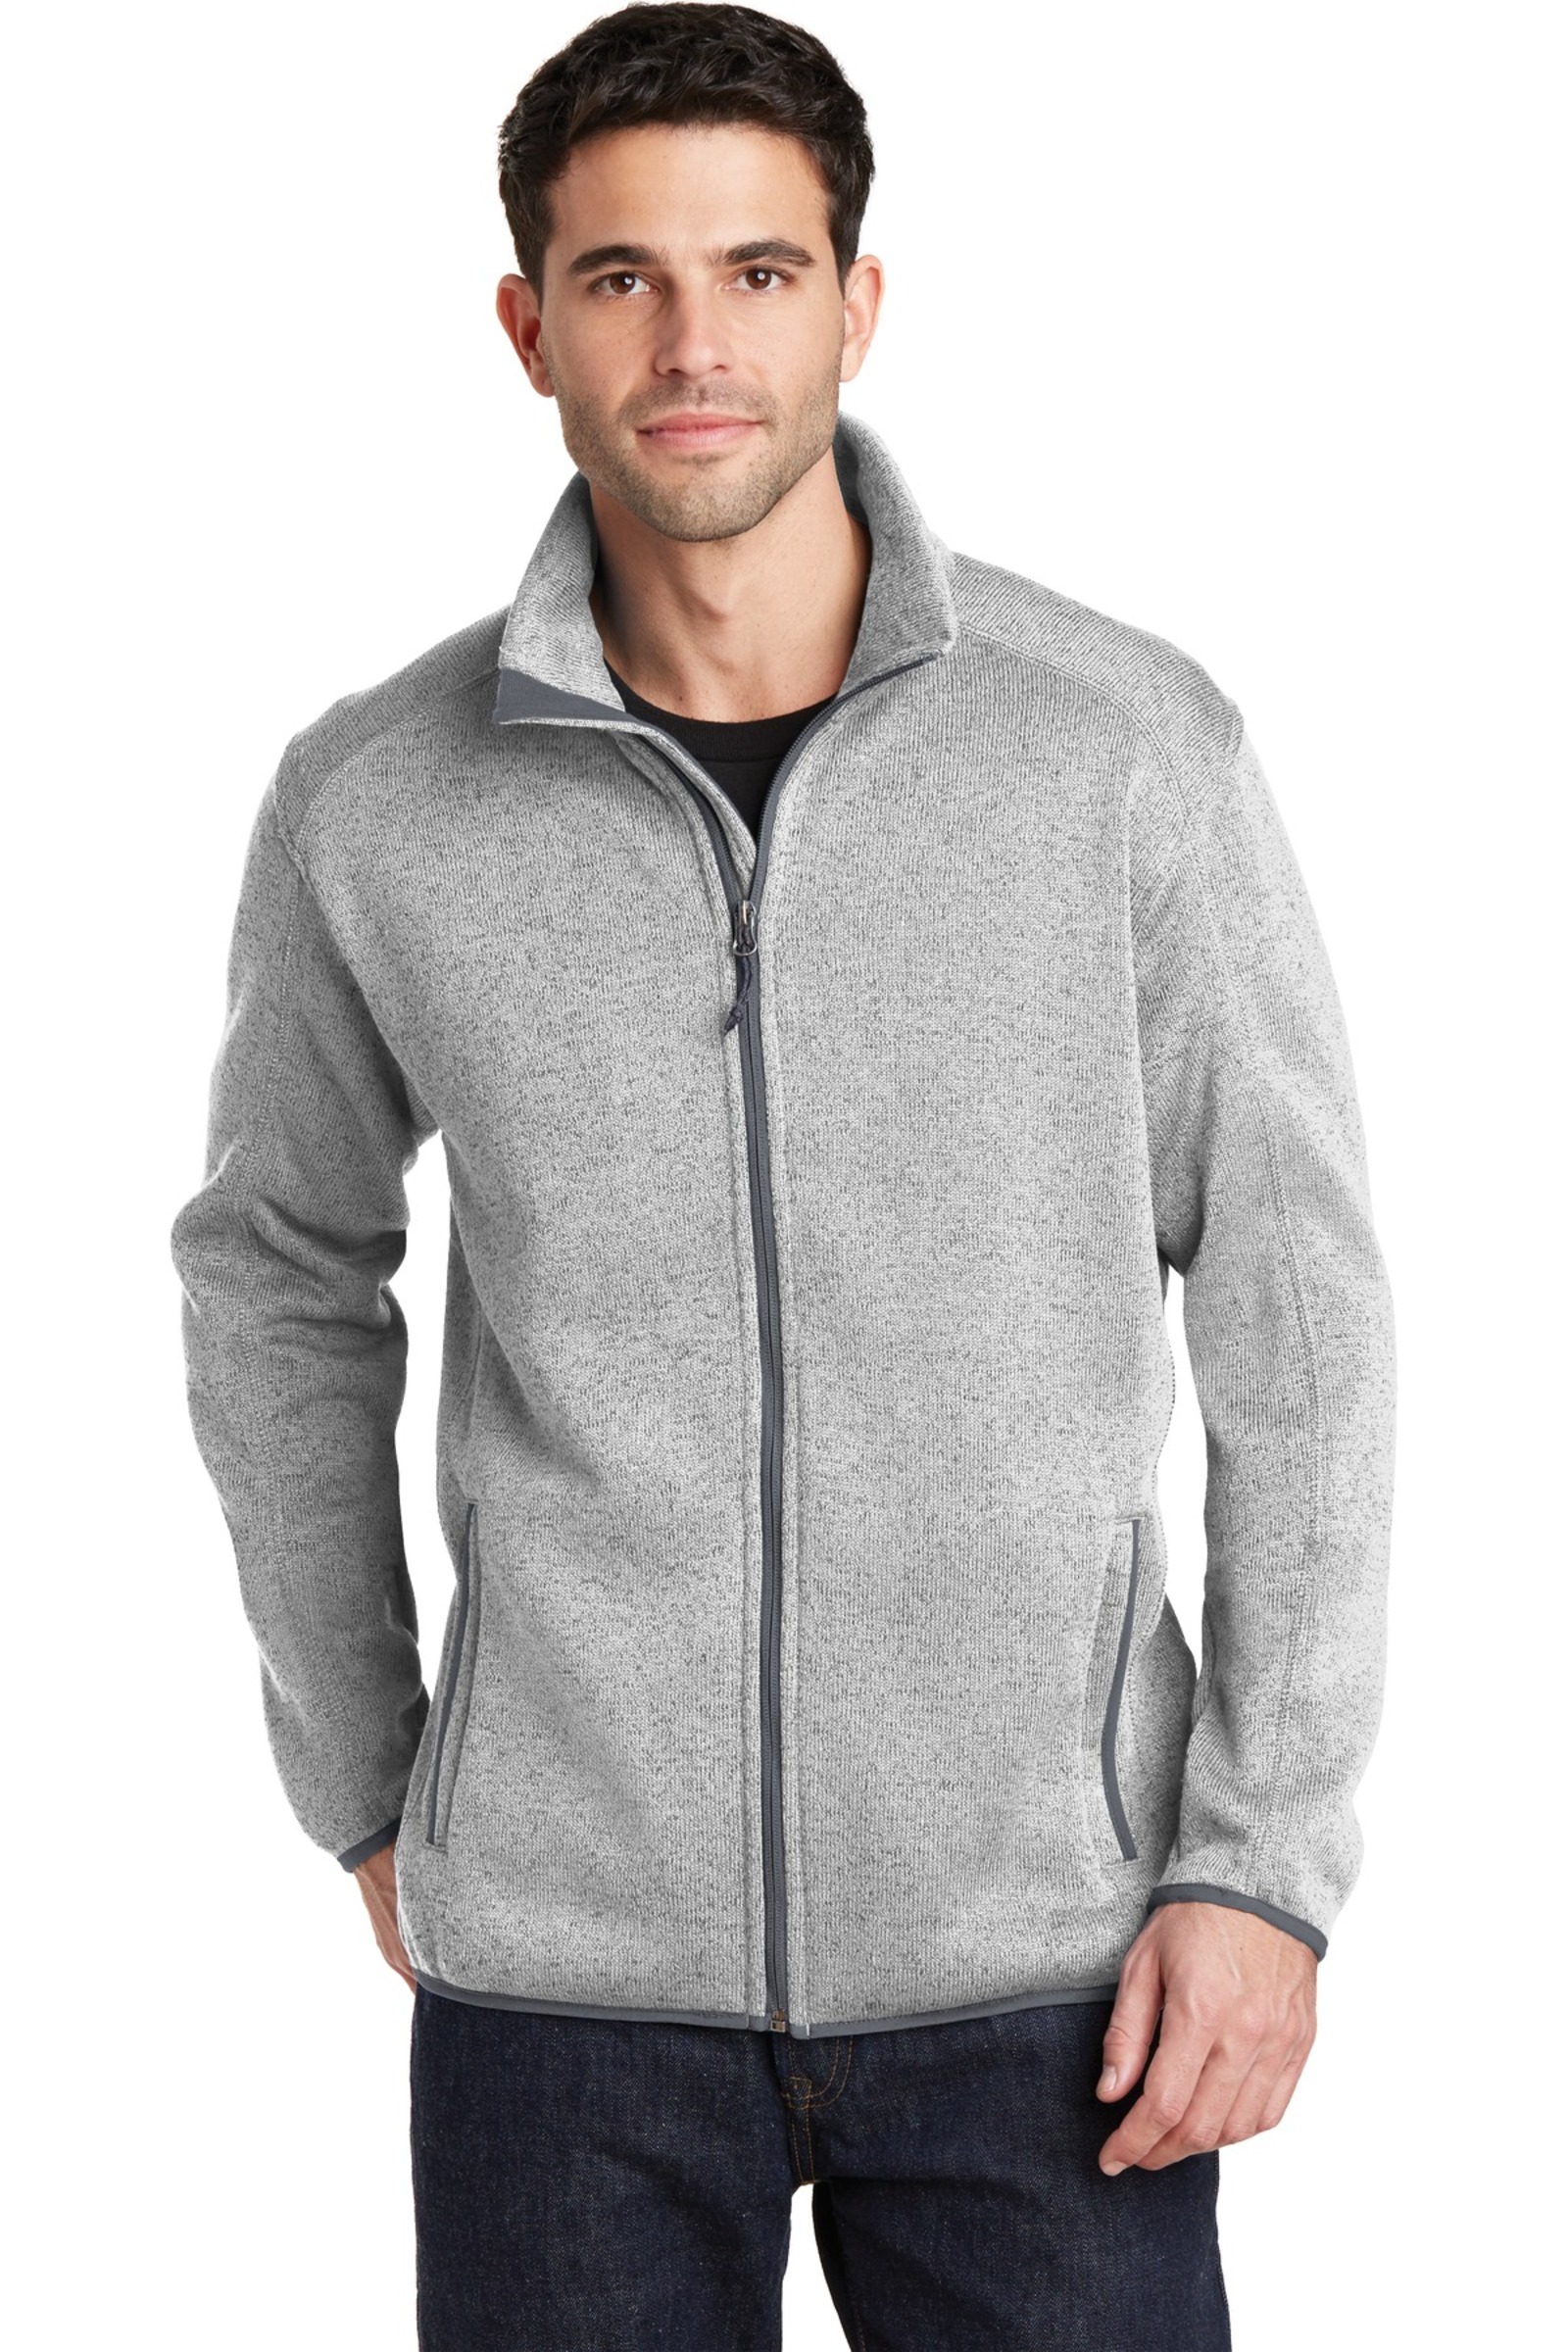 Port Authority Embroidered Men's Sweater Fleece Jacket